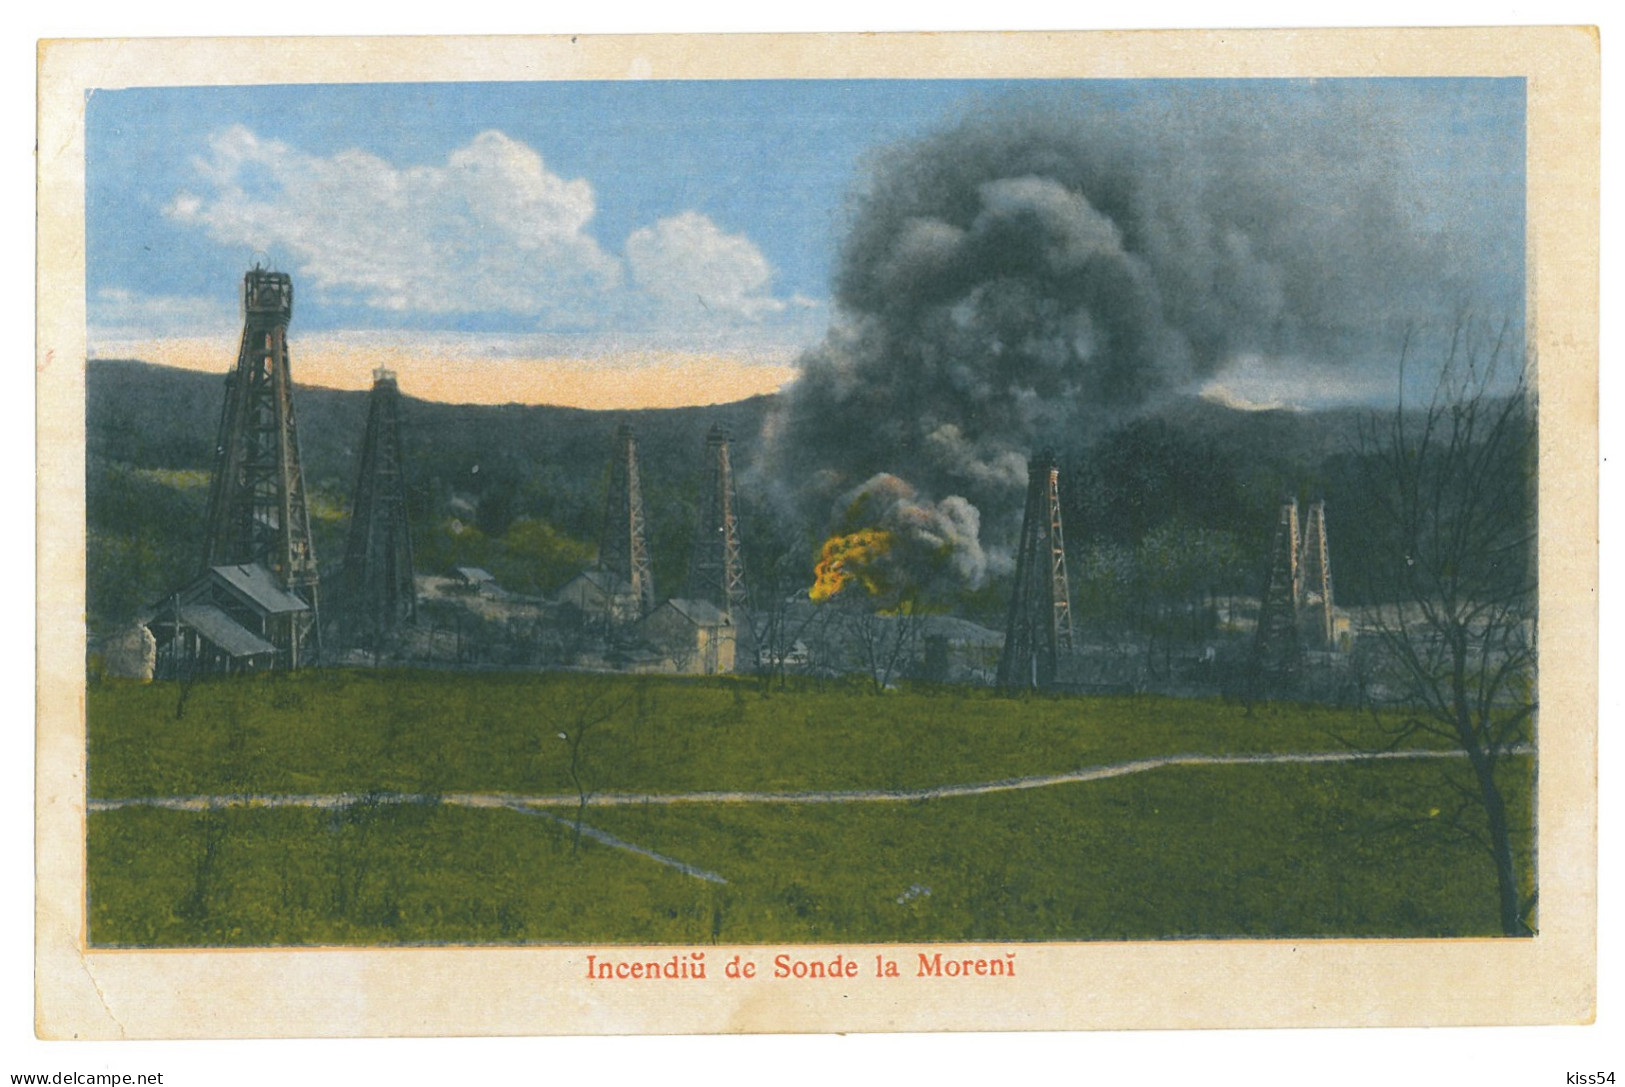 RO 09 - 22648 MORENI, Dambovita, Fire At The Oil Wells, Romania - Old Postcard - Unused - Roemenië